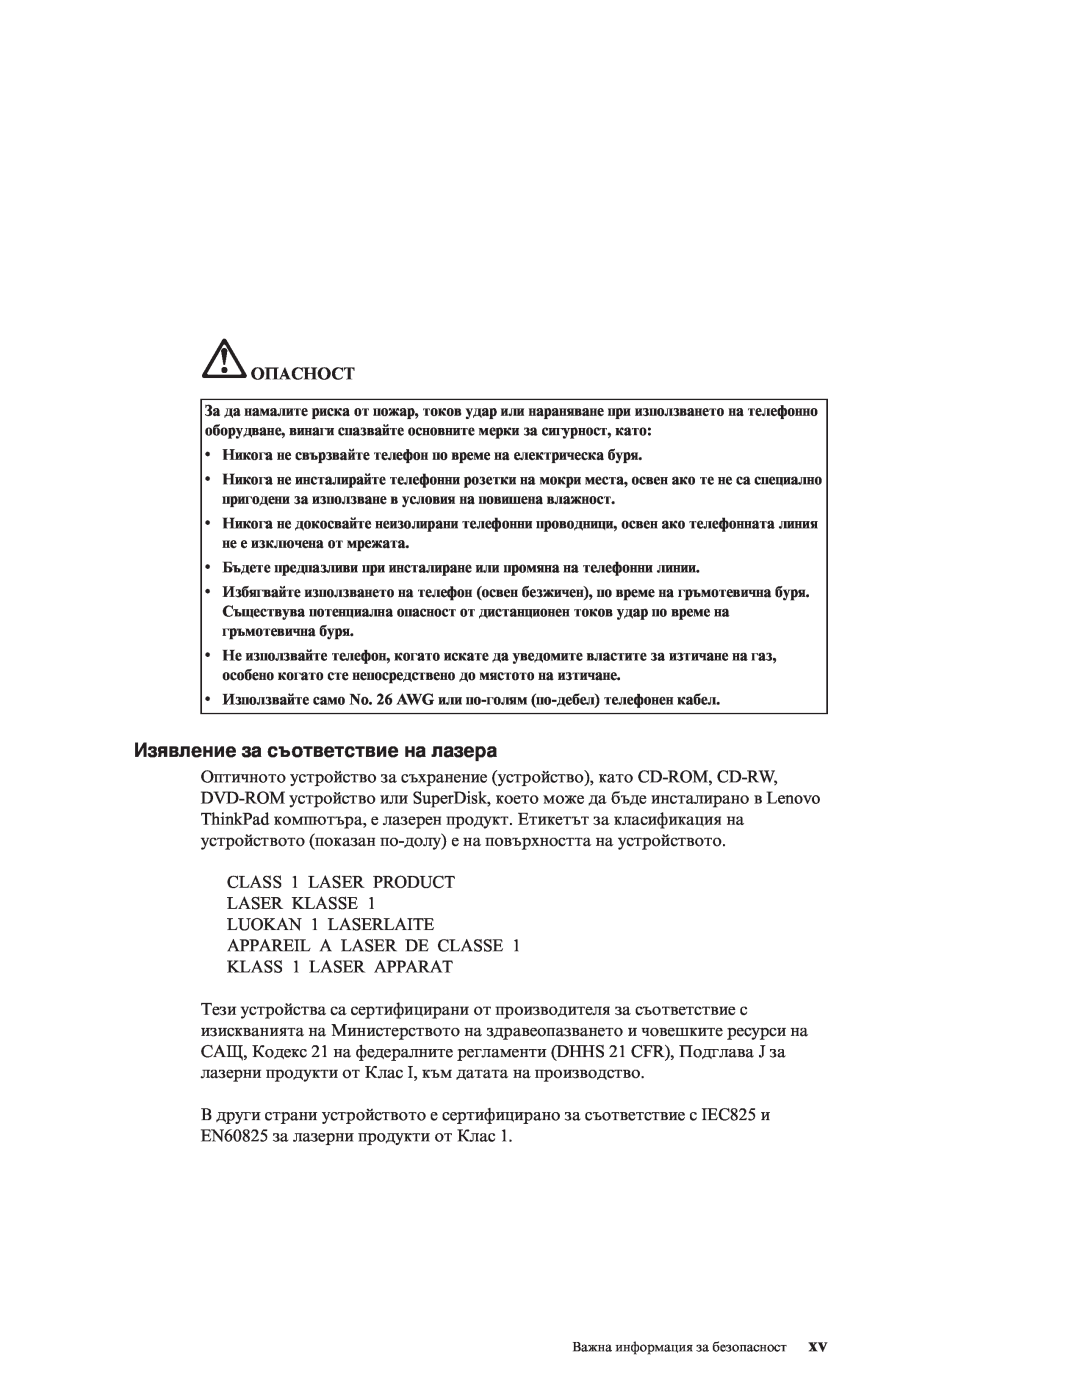 Lenovo Z60M manual Изявление за съответствие на лазера, Опасност 